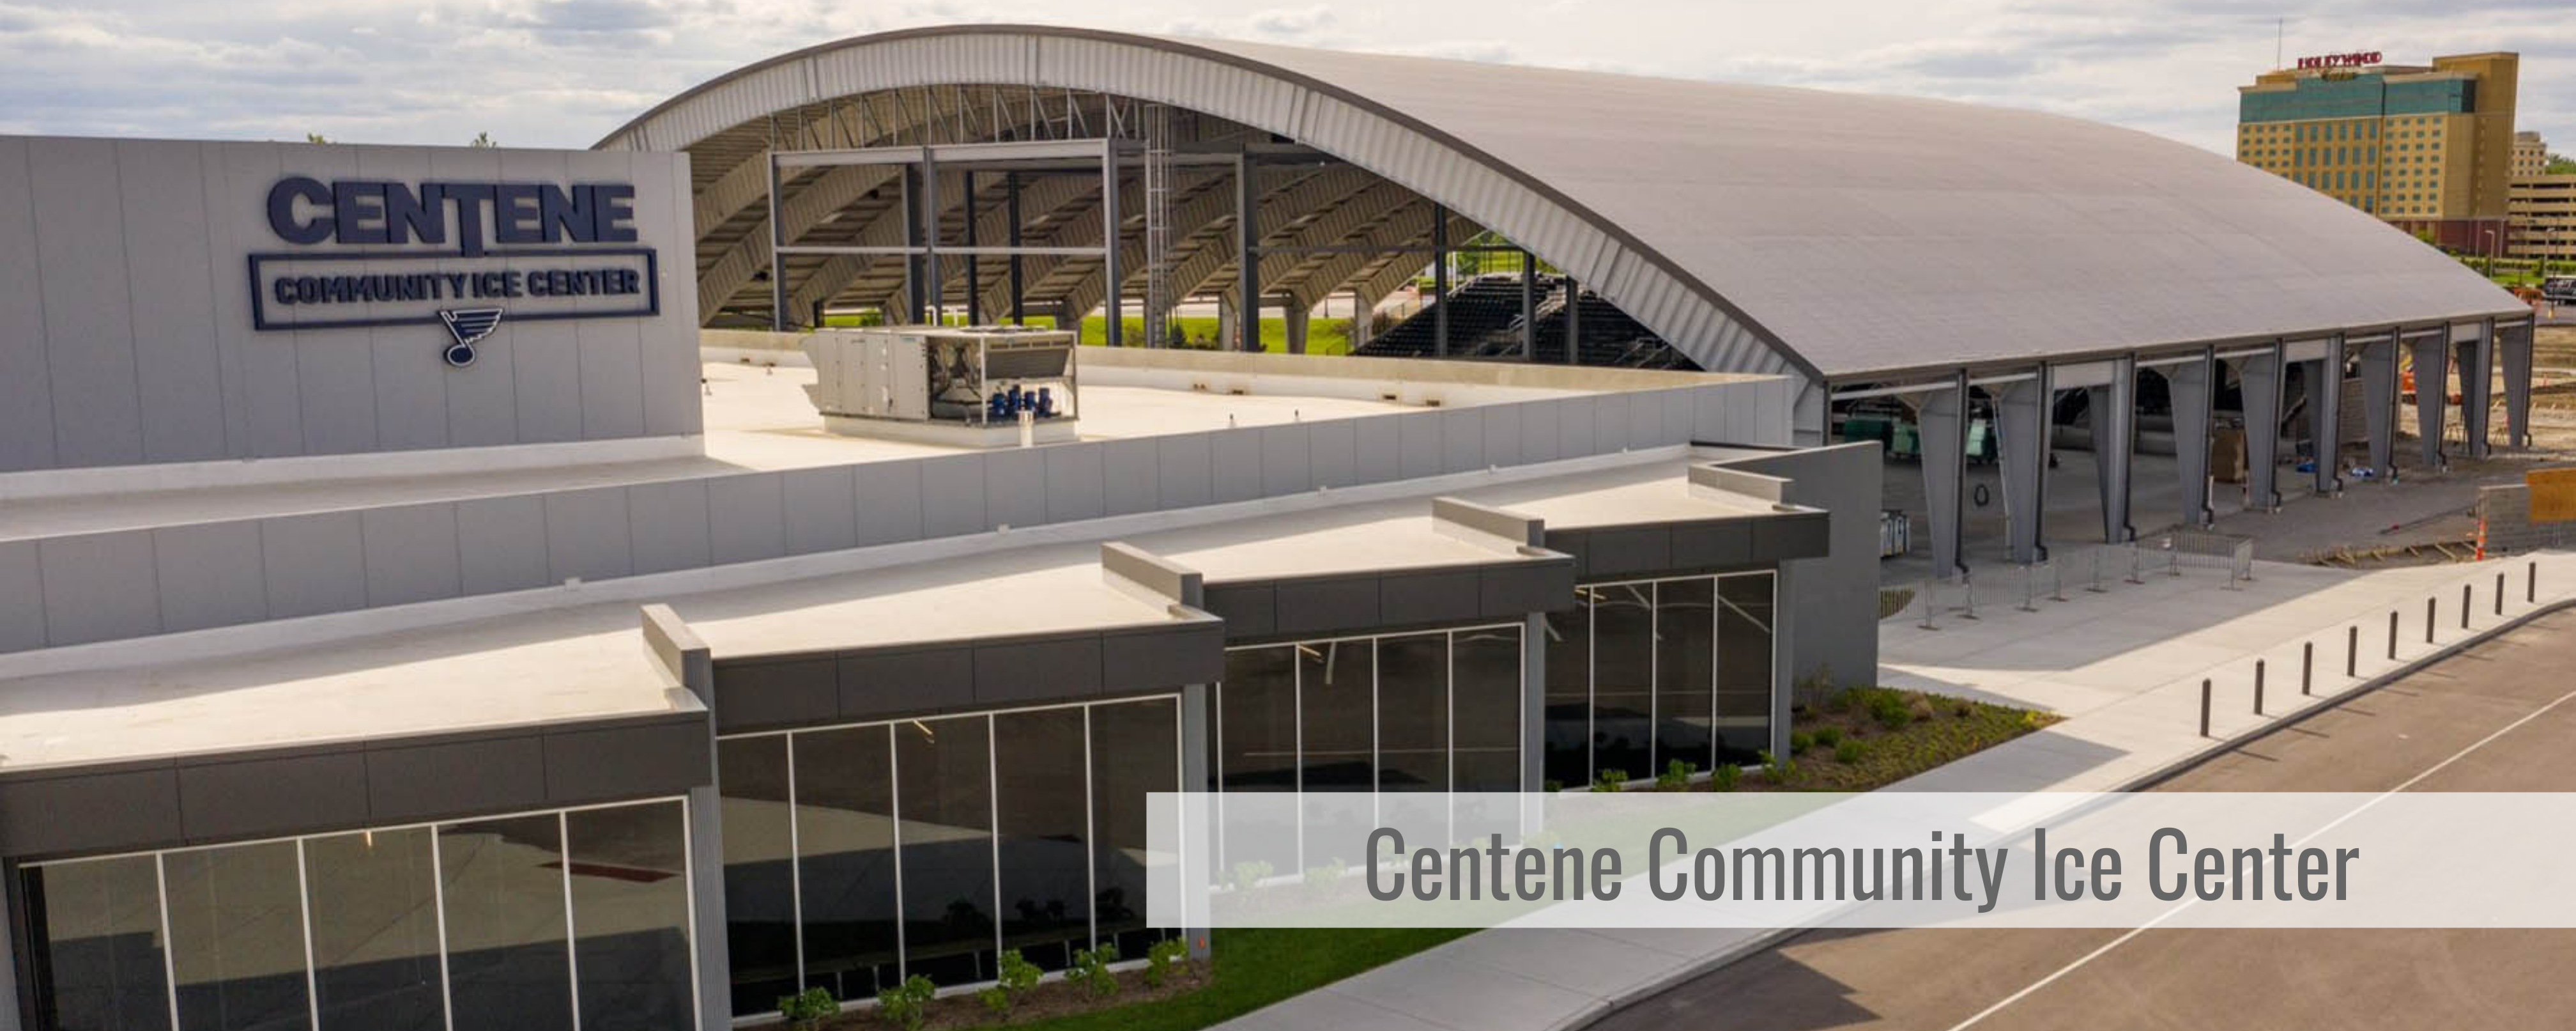 Centene Community Ice Center